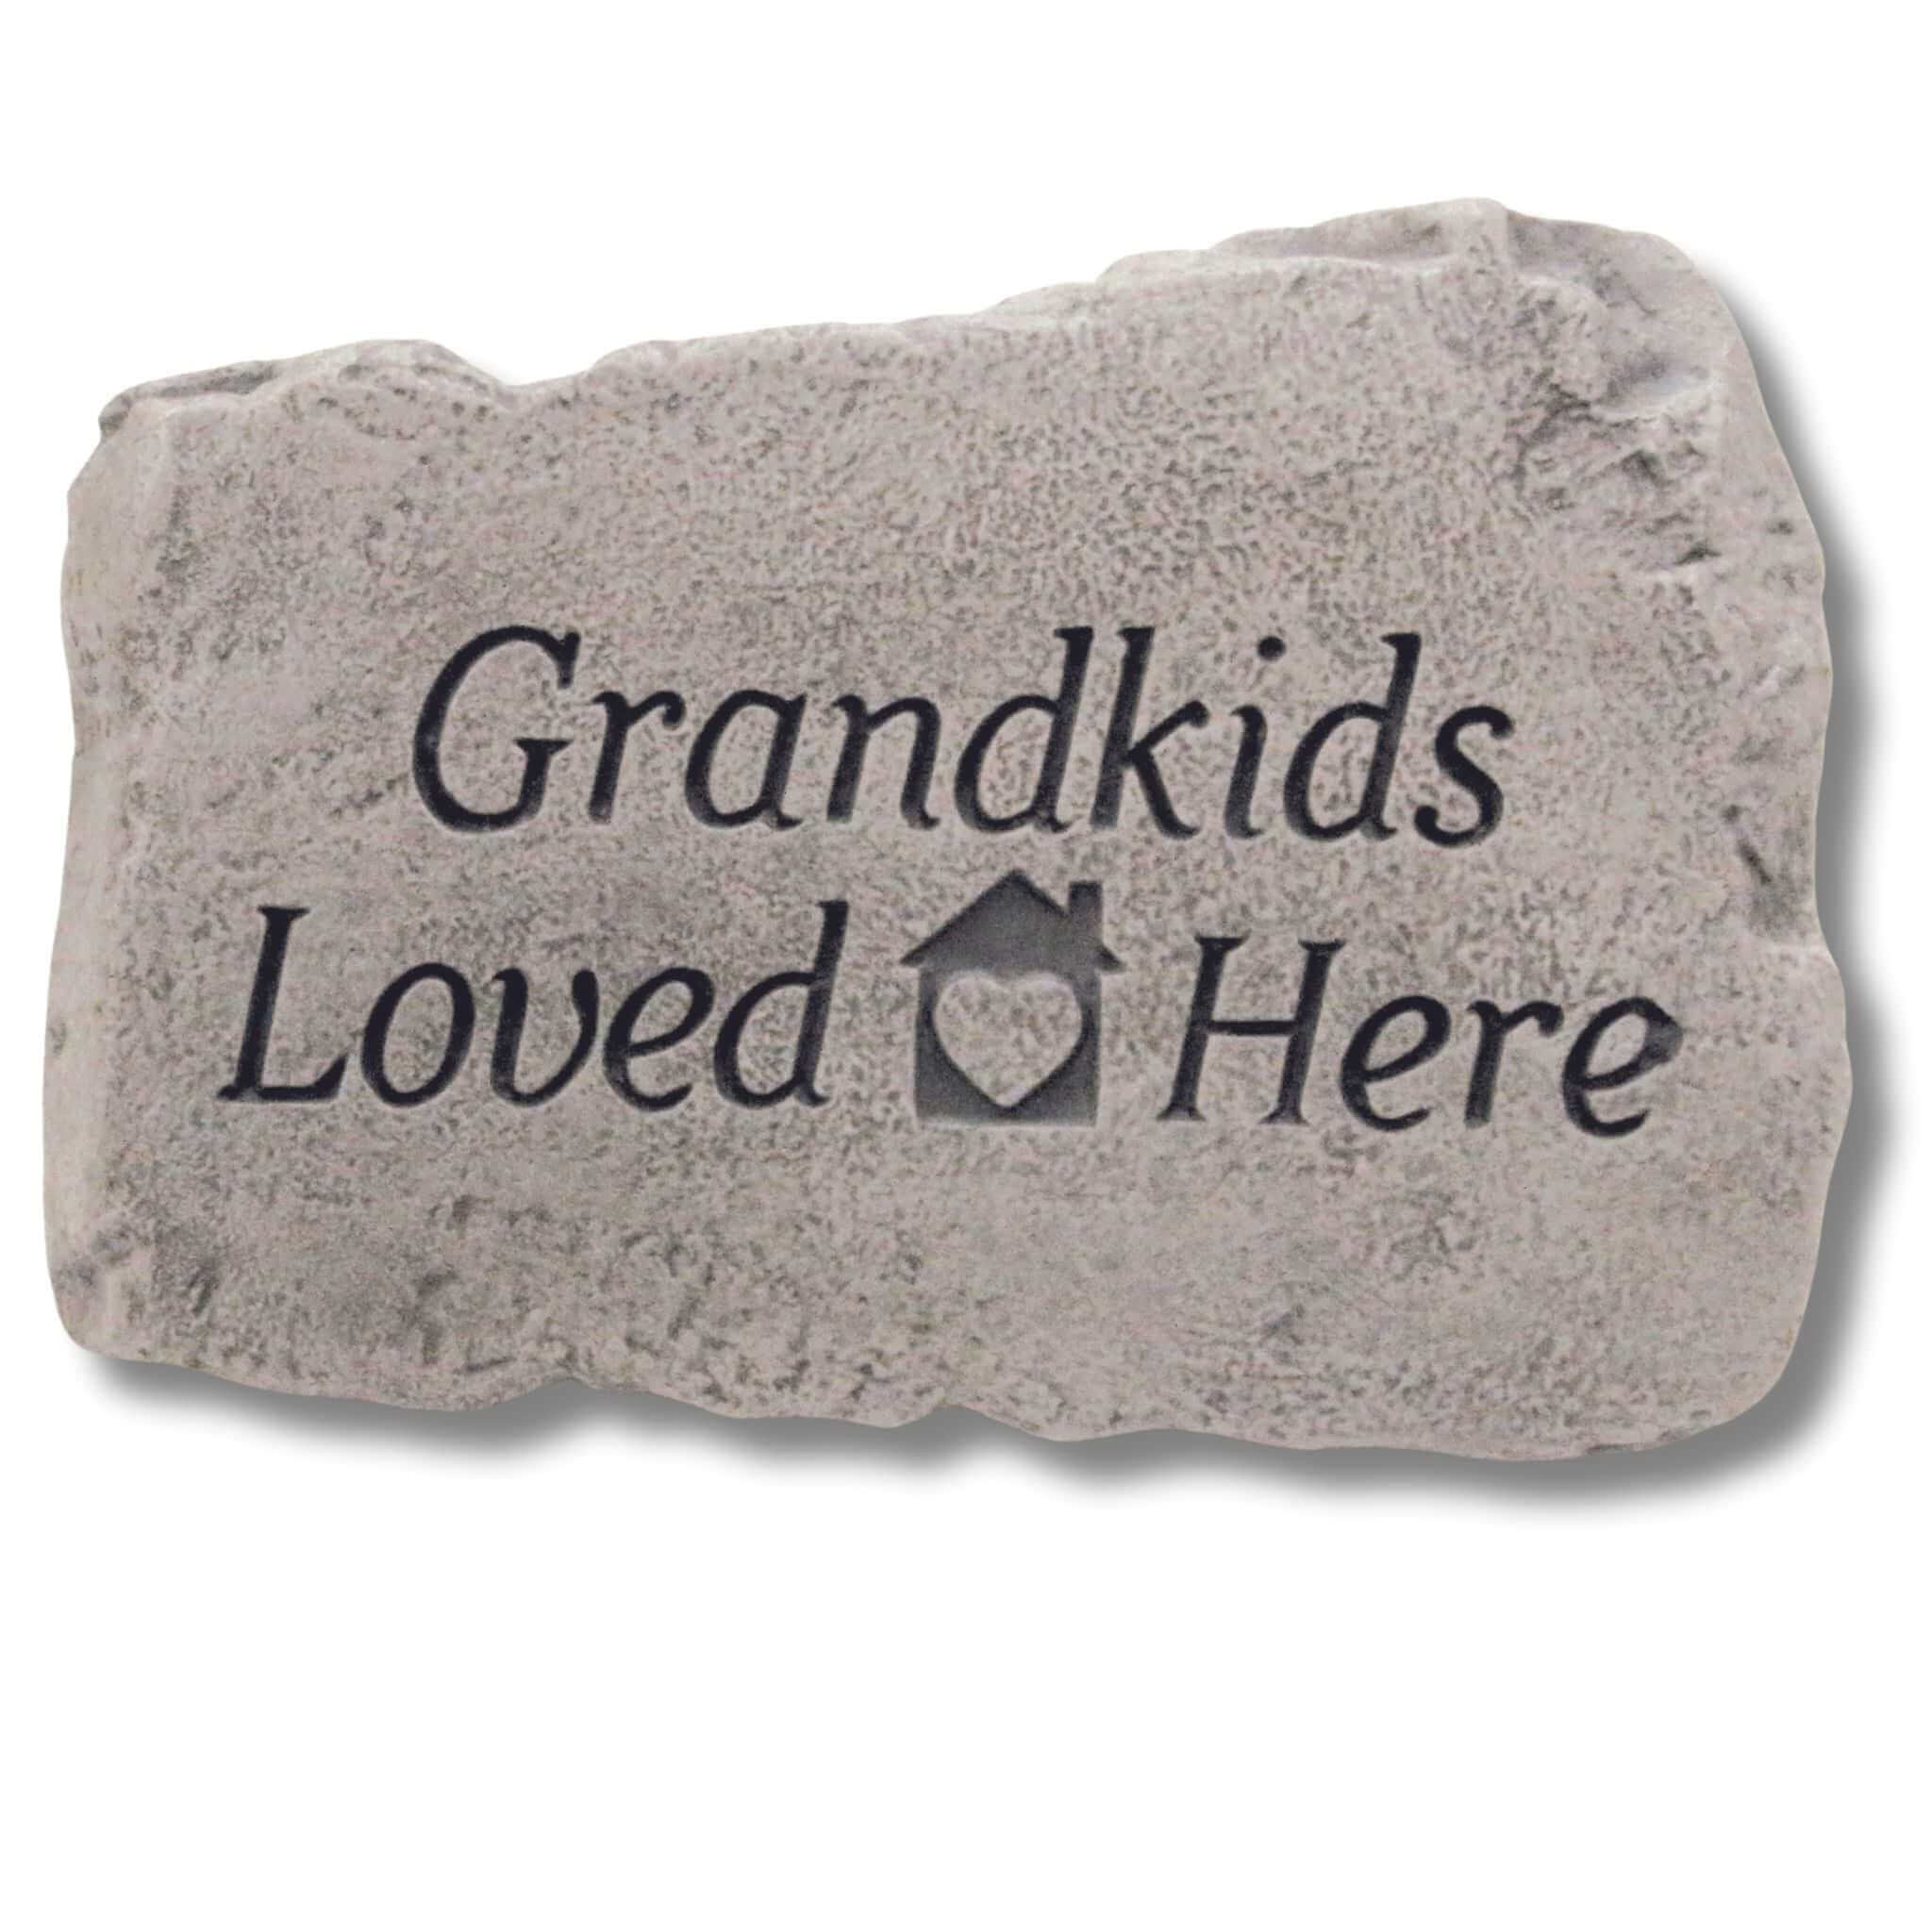 Grandkids Concrete Garden Greeting Stone - Massarellis #1745